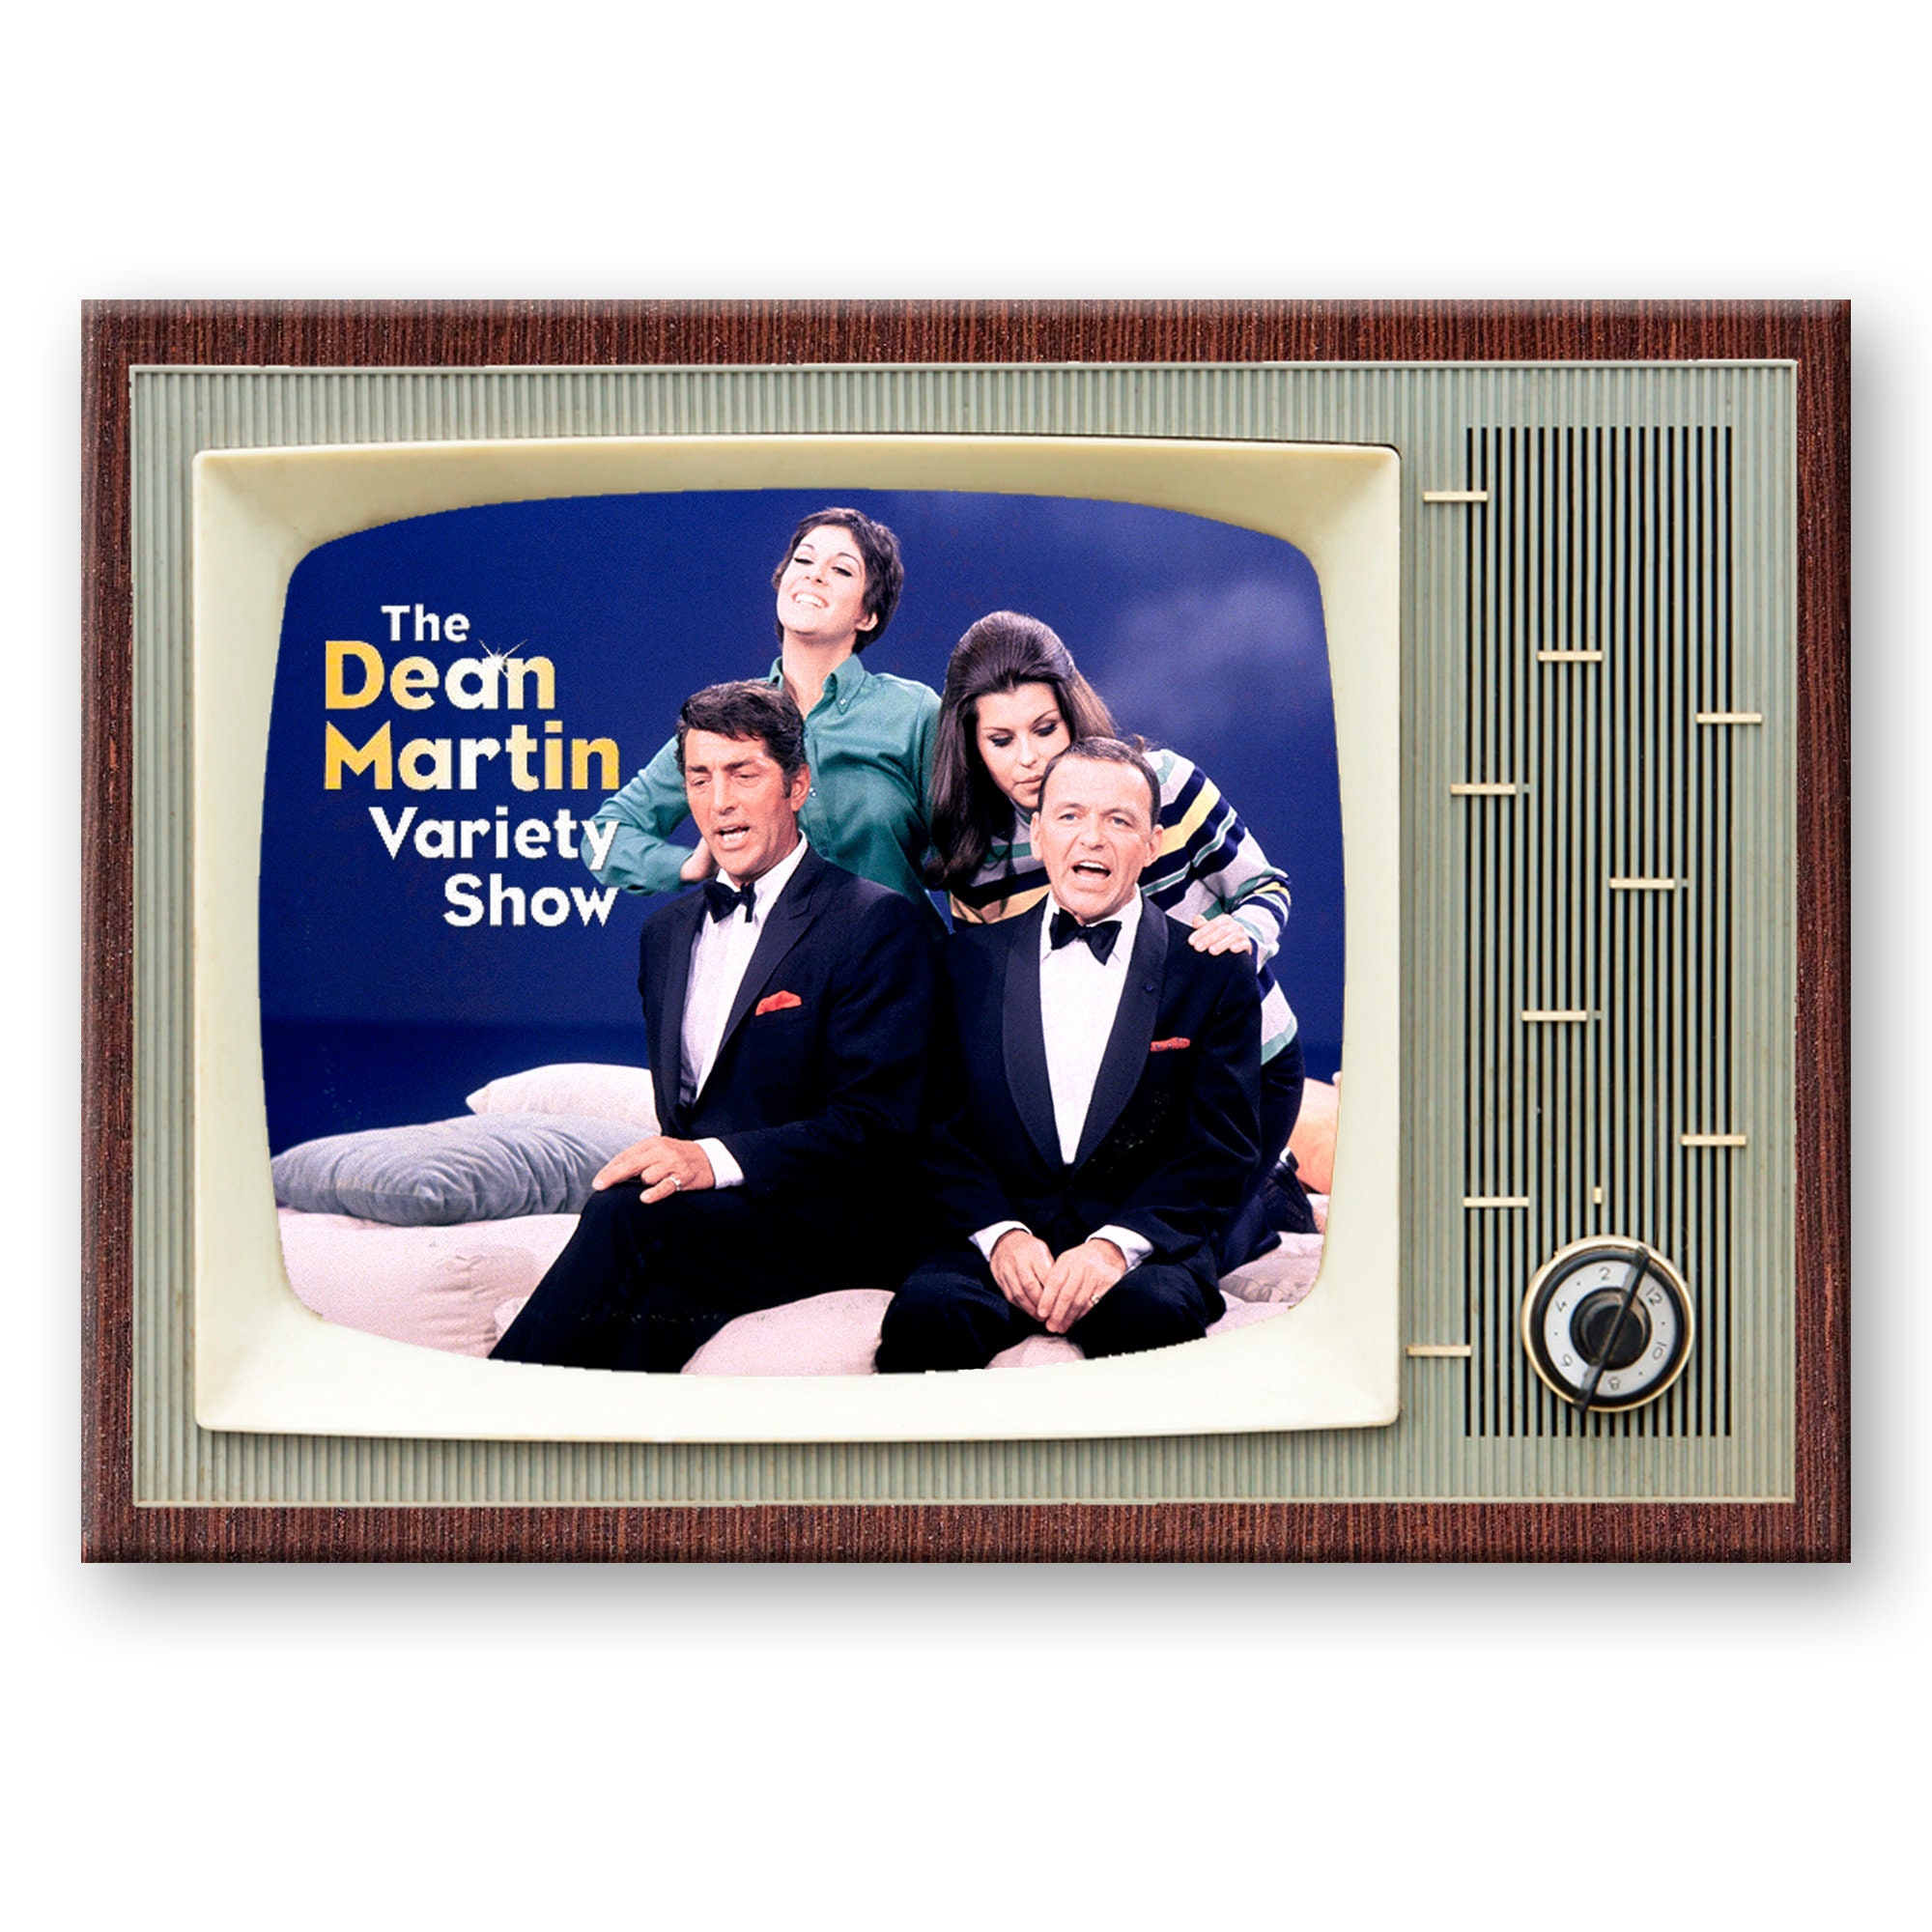 FRESH PRINCE of Bel-Air TV Show Retro Tv Design 3 12 inch x 2 12 inch Steel Cased Fridge Magnet